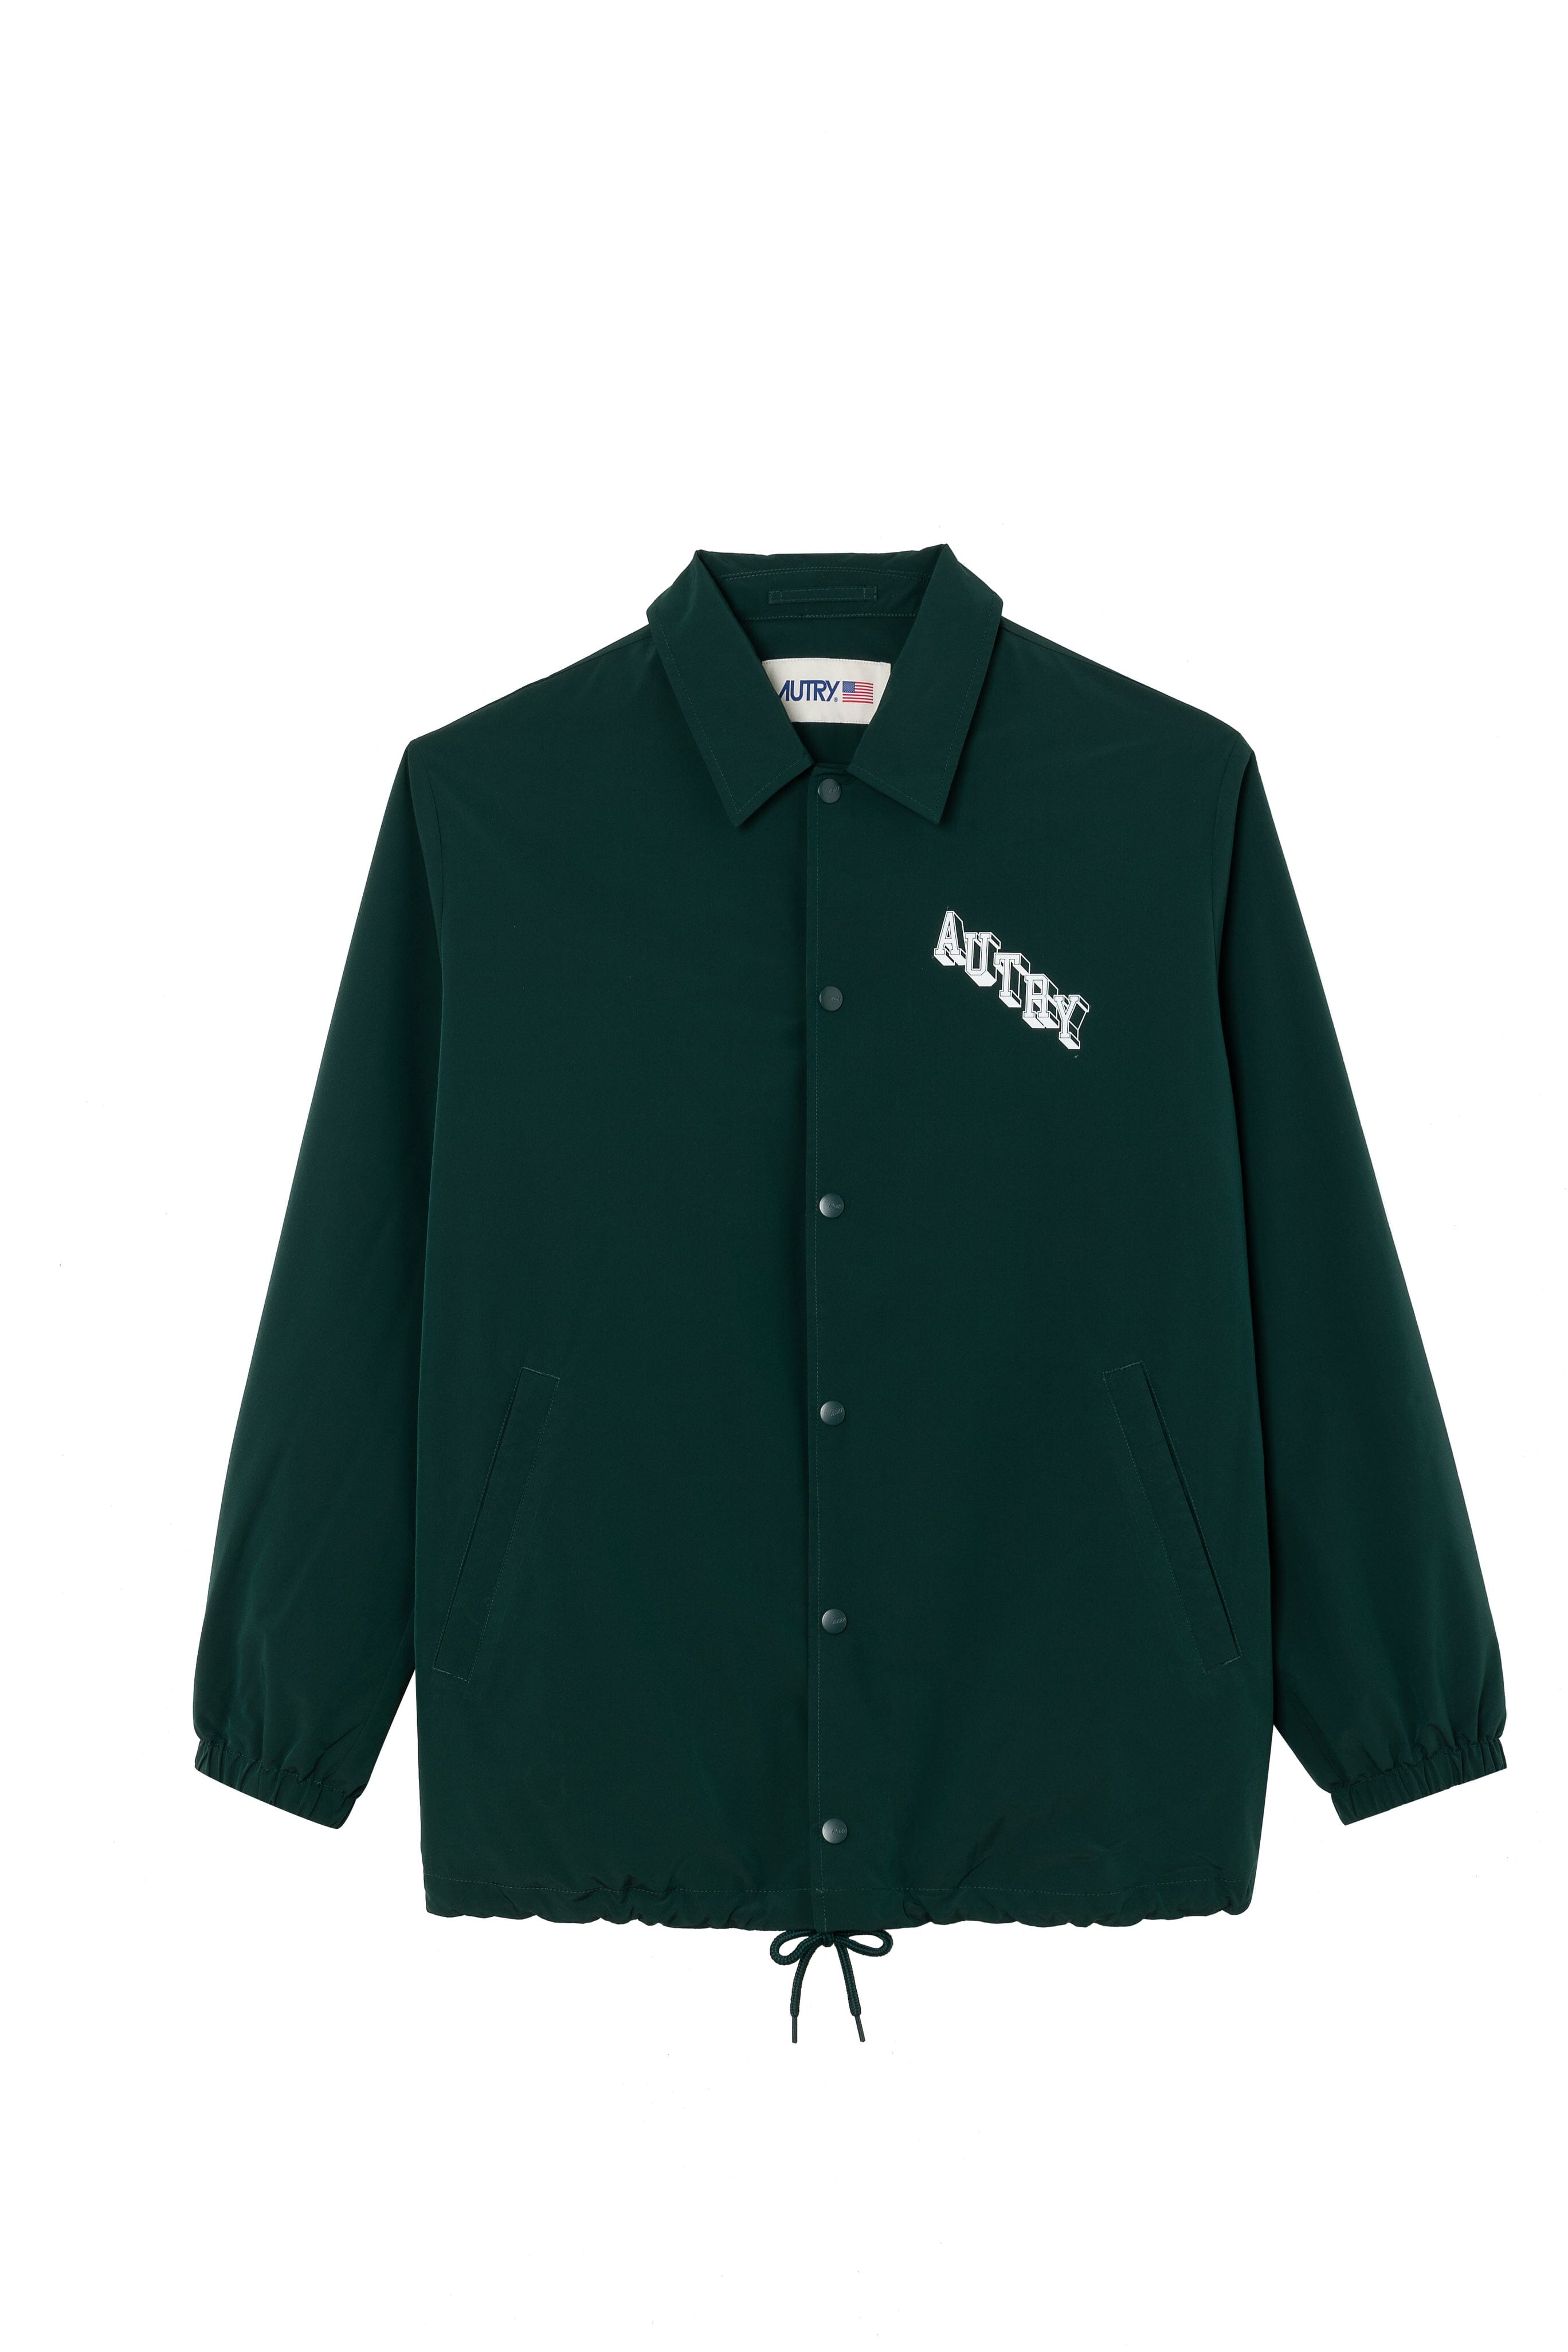 AUTRY - JAPM 547G - Autry Jacket - Verde Scarpe Uomo AUTRY - Collezione uomo 